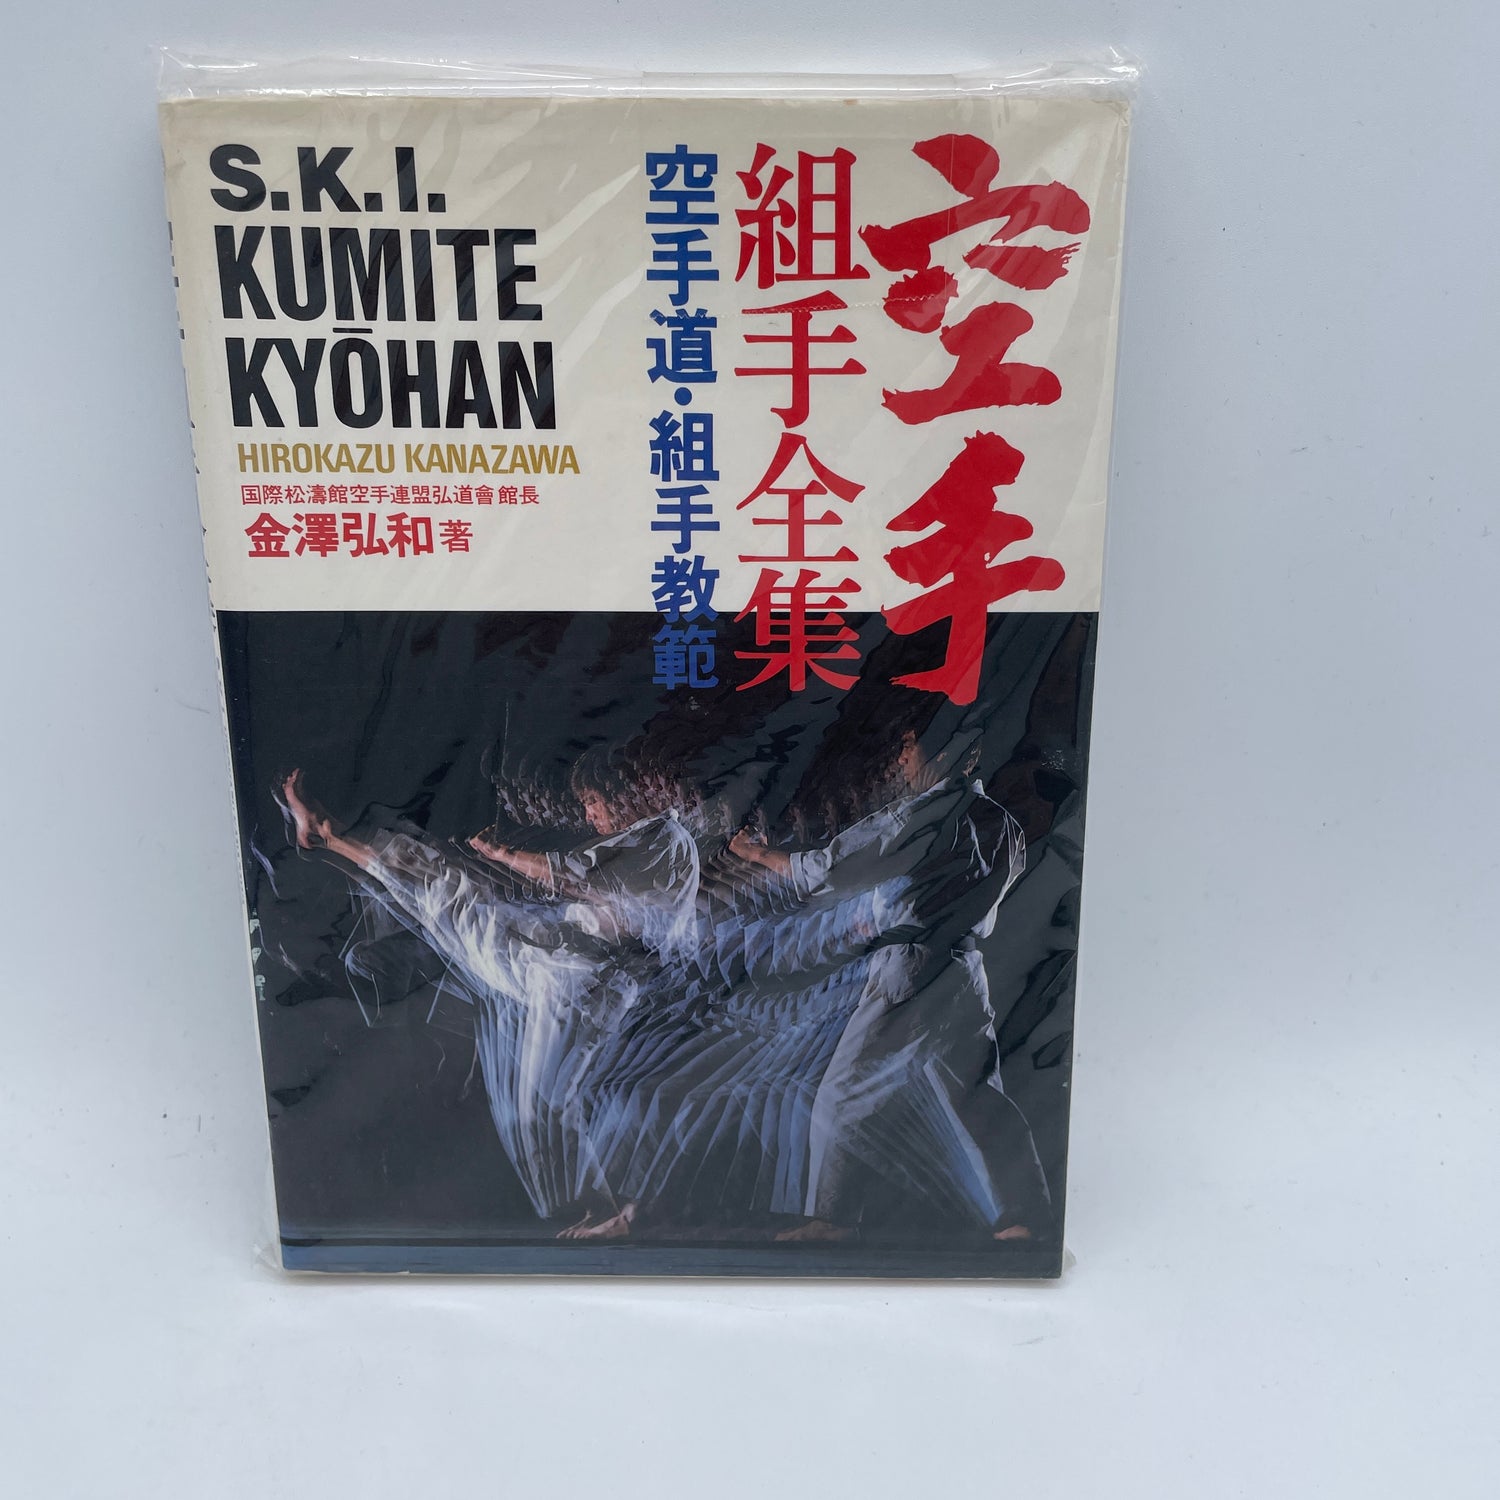 Shotokan Karate International Kumite Kyohan Book by Hirokazu Kanazawa (Preowned)